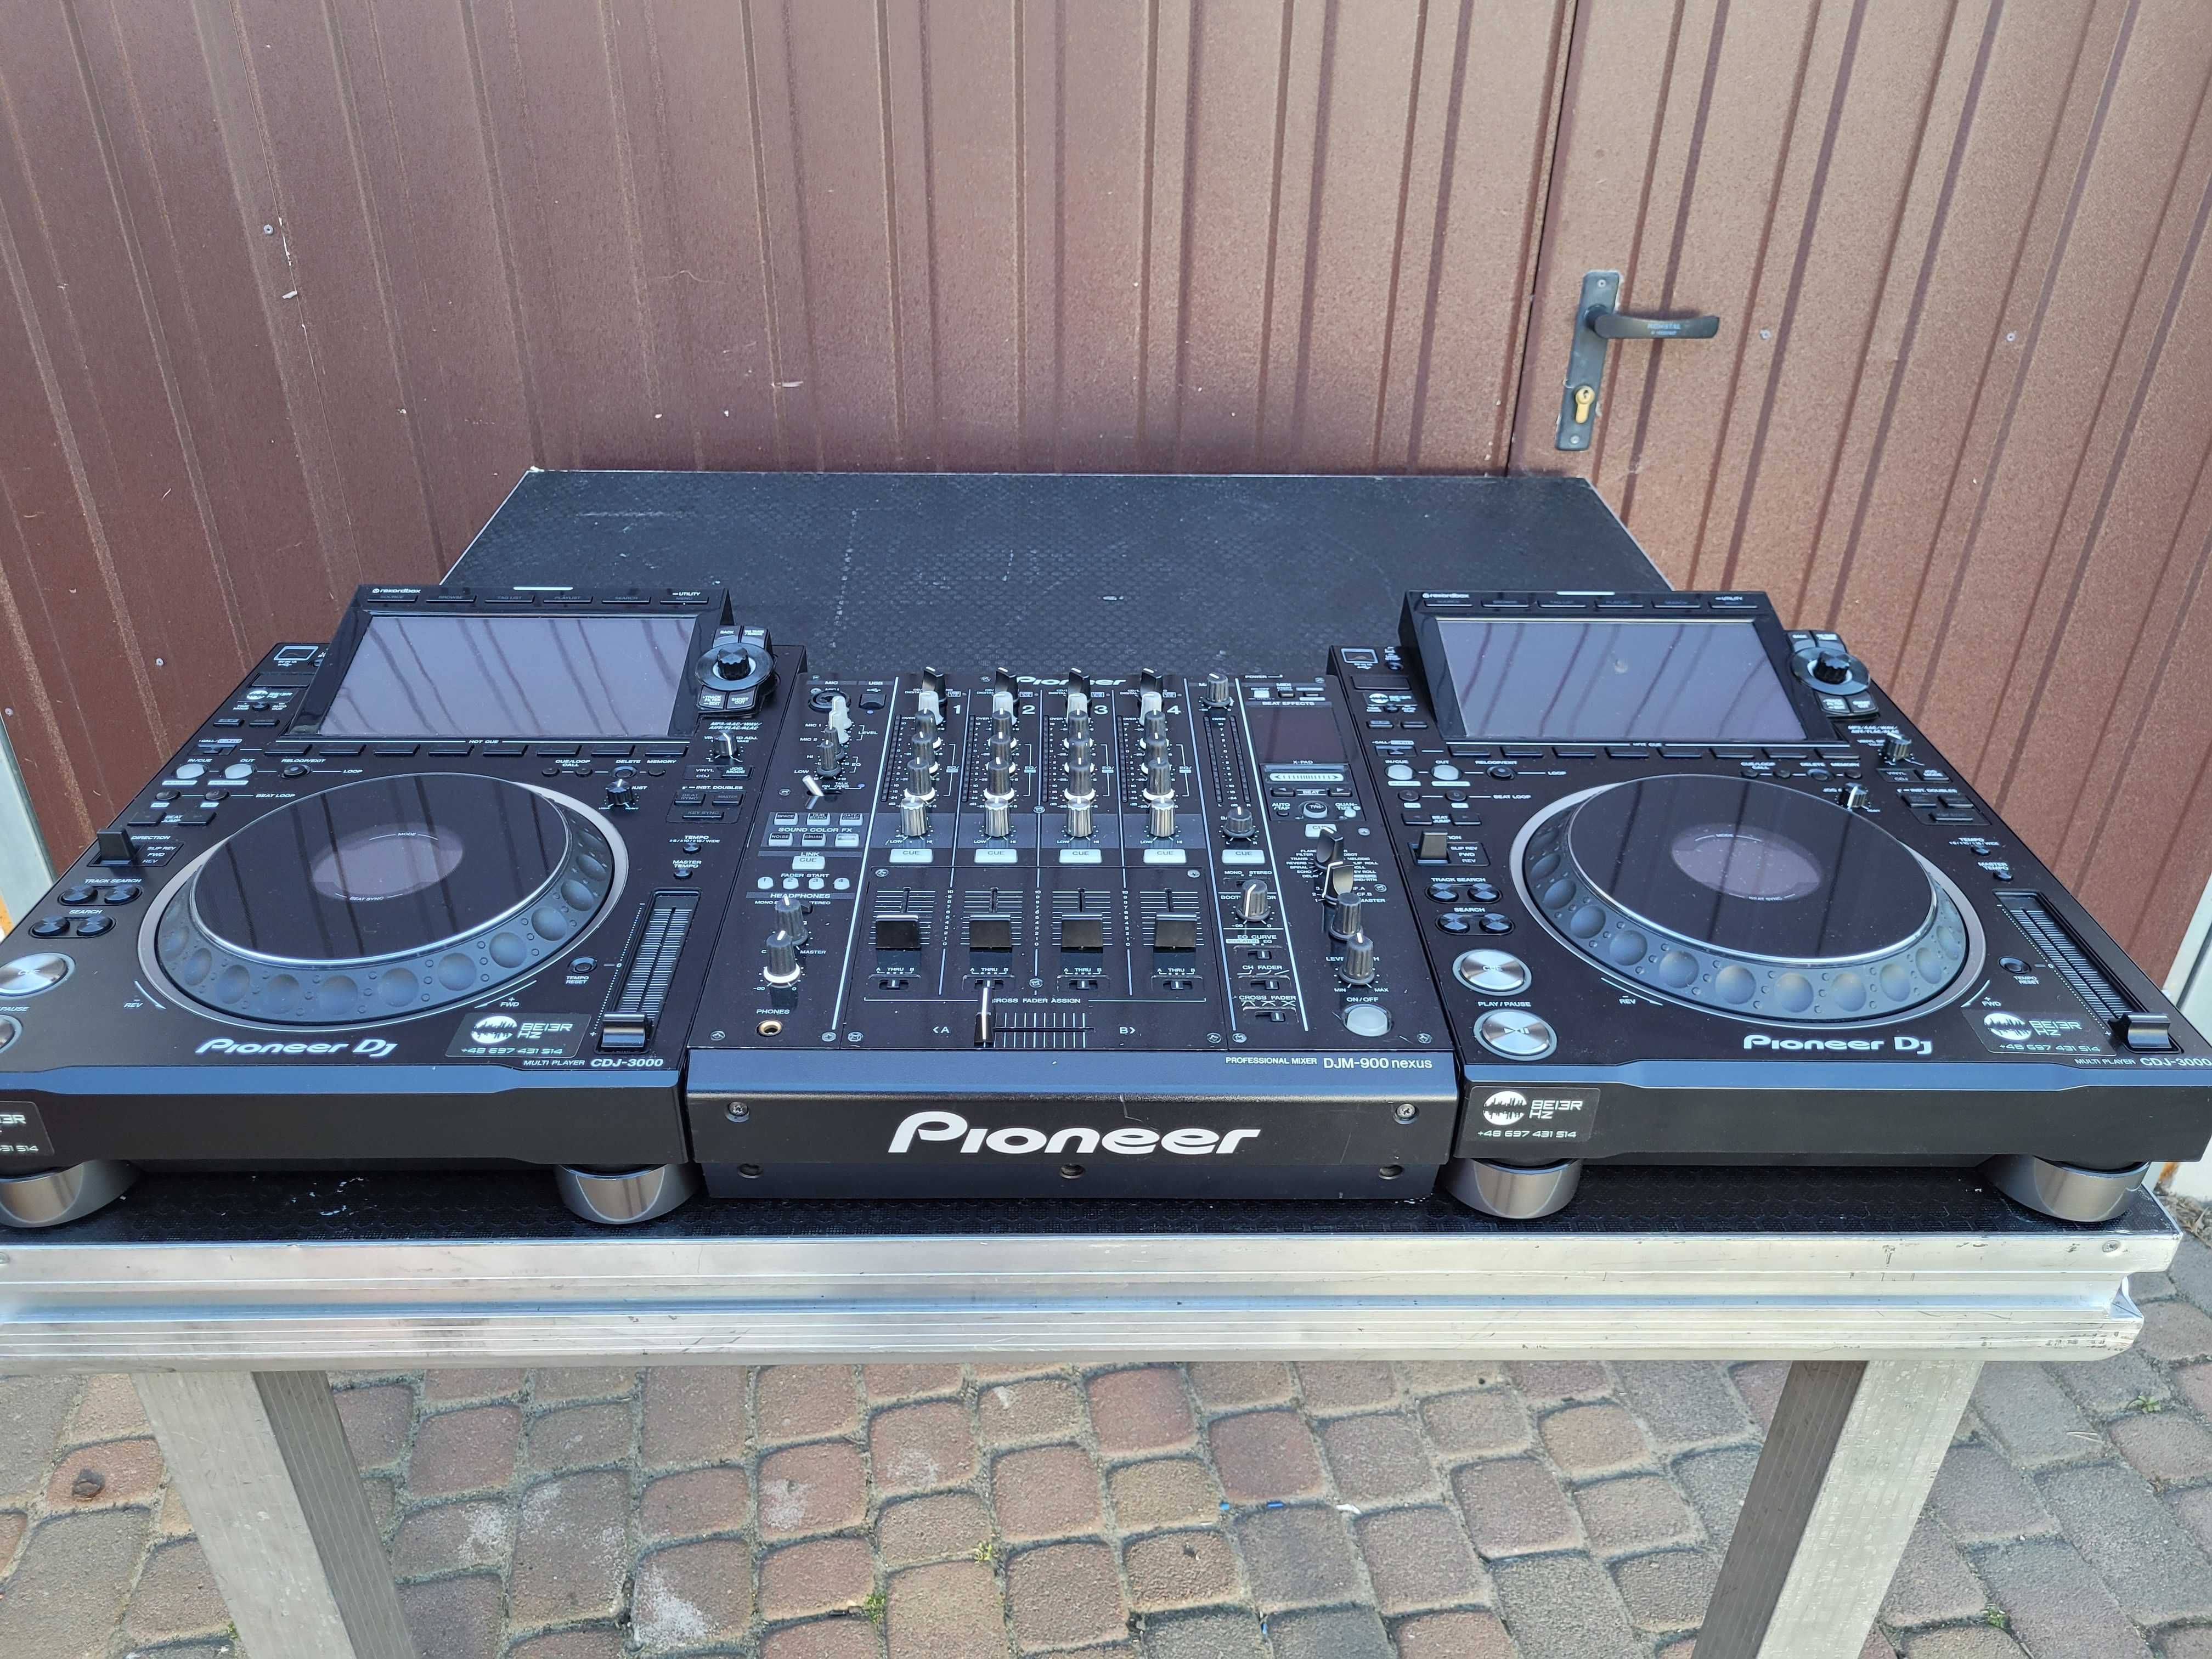 Mikser Pioneer DJ DJM 900 nexus (nxs, nxs2, cdj)